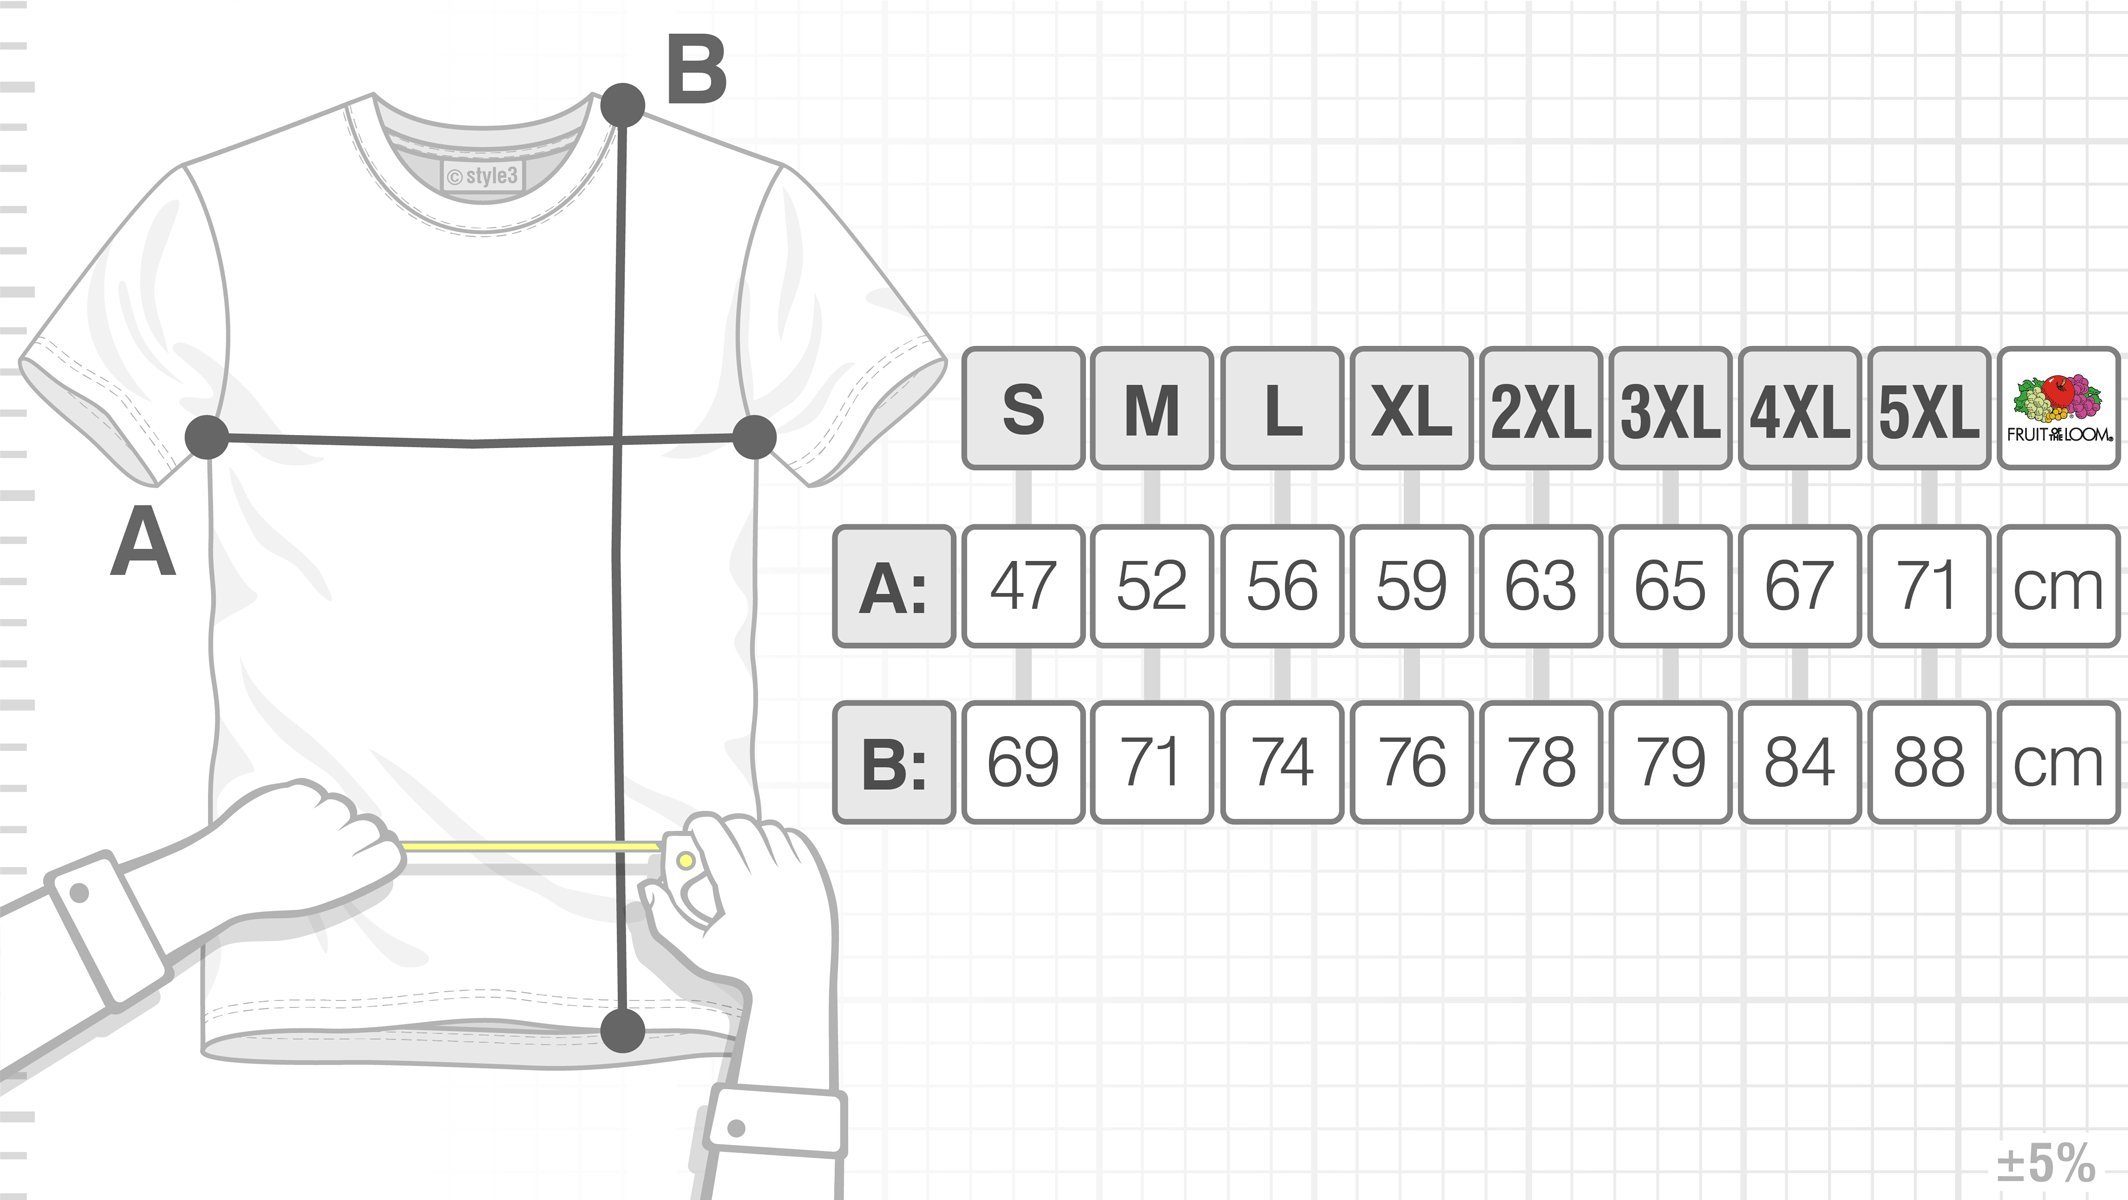 link Nature T-Shirt Triforce hyrule Herren Print-Shirt style3 gamer